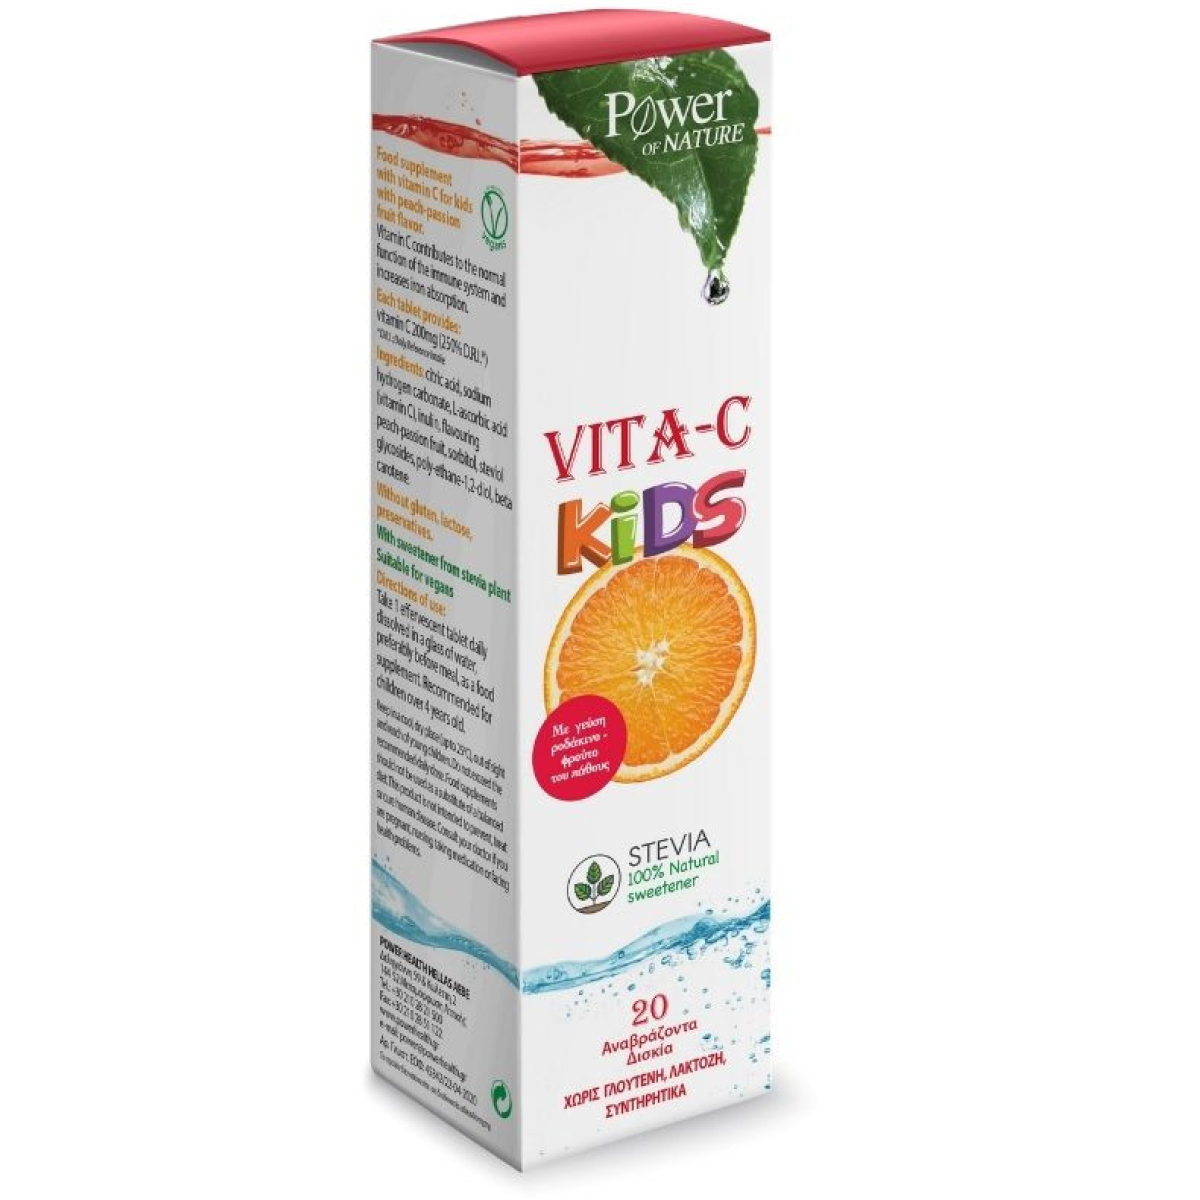 Power of Nature | Vita-C Kids Βιταμίνη C για Παιδιά με Stevia | 20αναβρ.δισκία